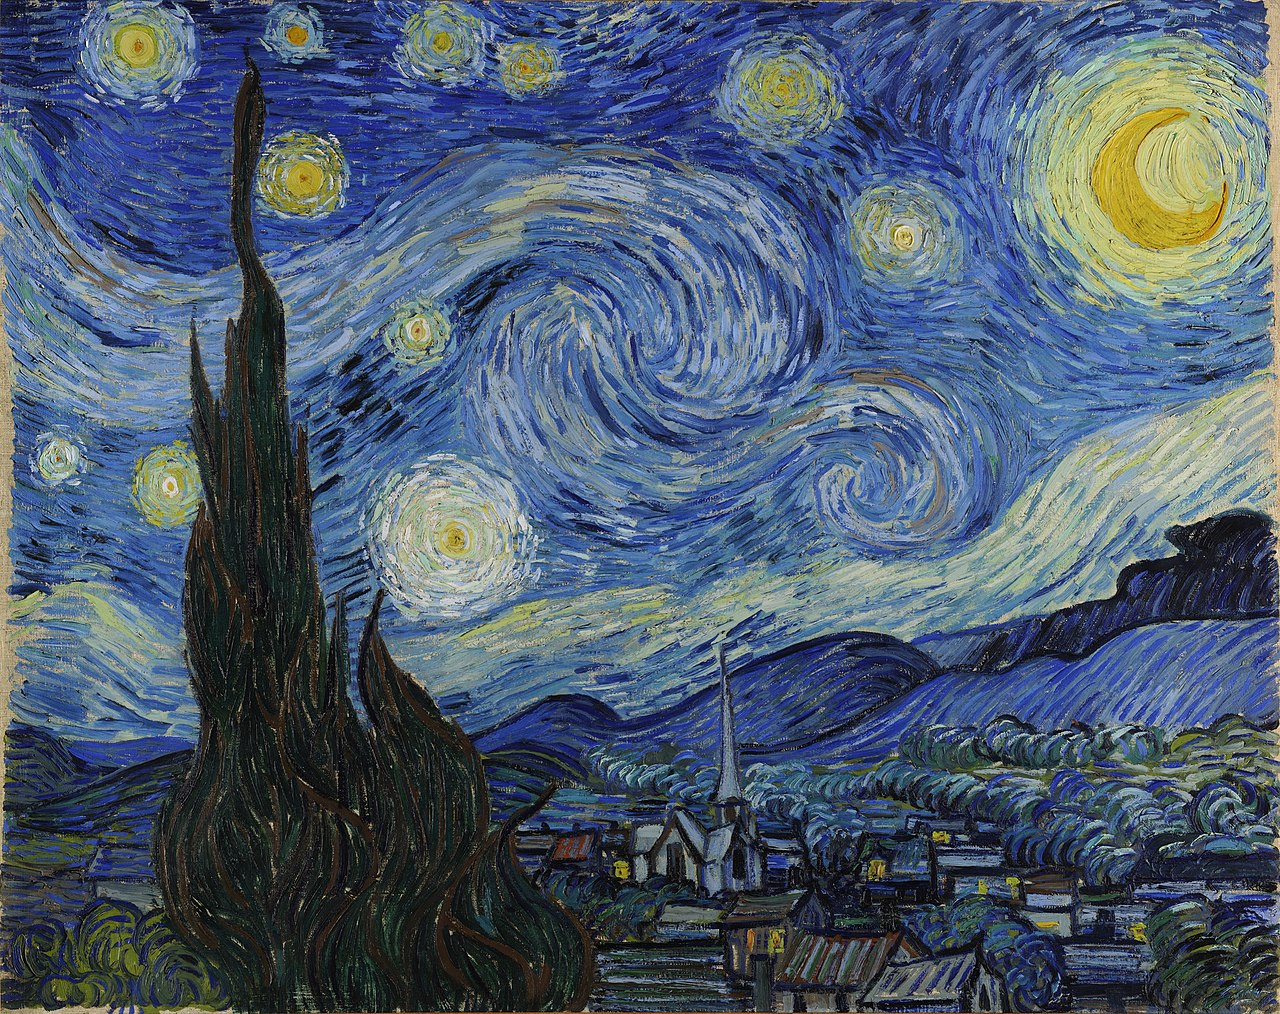 Yıldızlı Gece by Vincent van Gogh - 1889 - 73 x 92 cm Museum of Modern Art